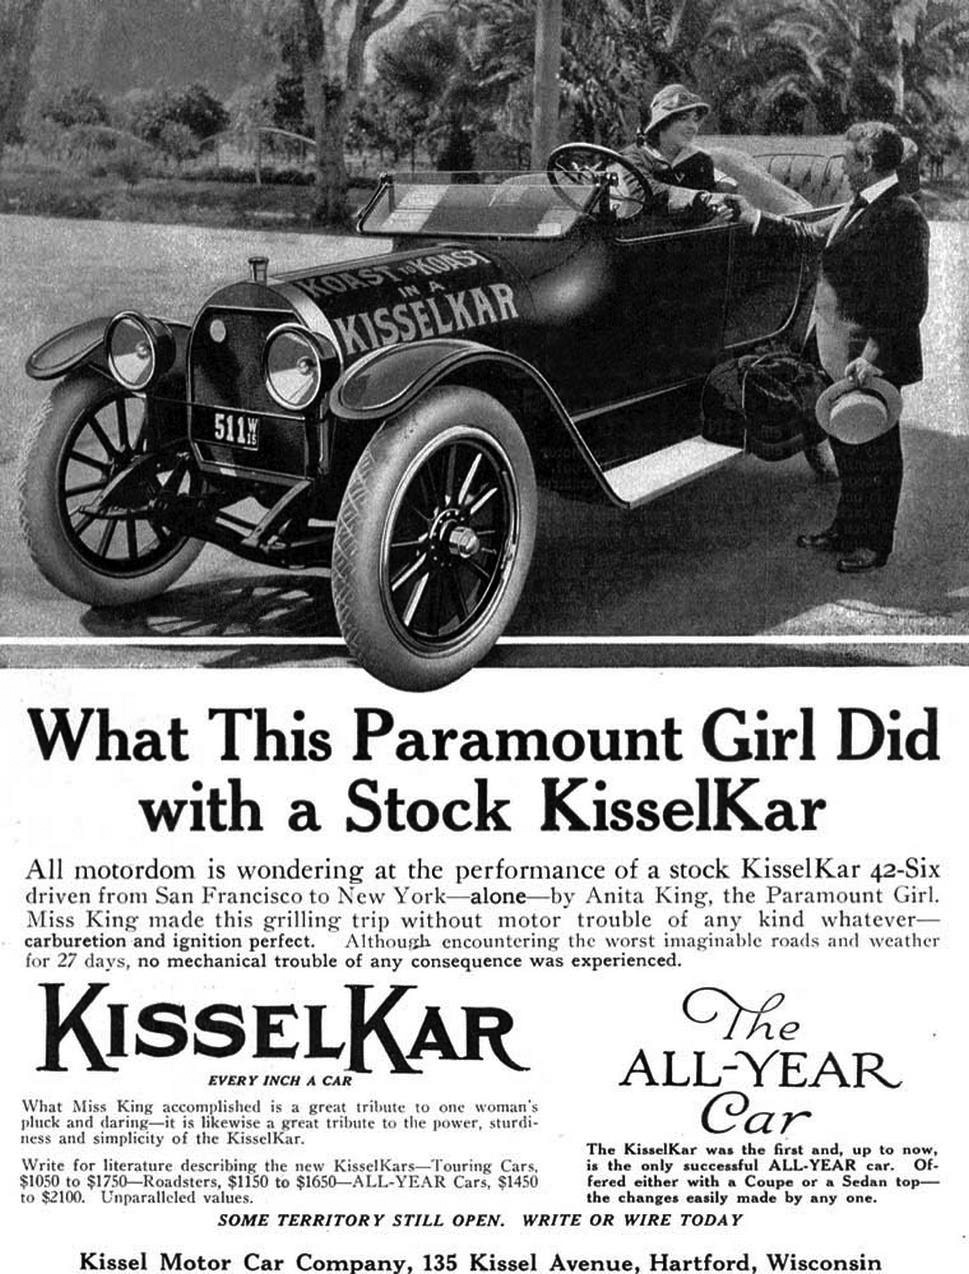 Реклама Kissel Kar, на каком киноактриса Анита Кинг в 1915 году за 48 дней пересекла США от побережья до побережья.